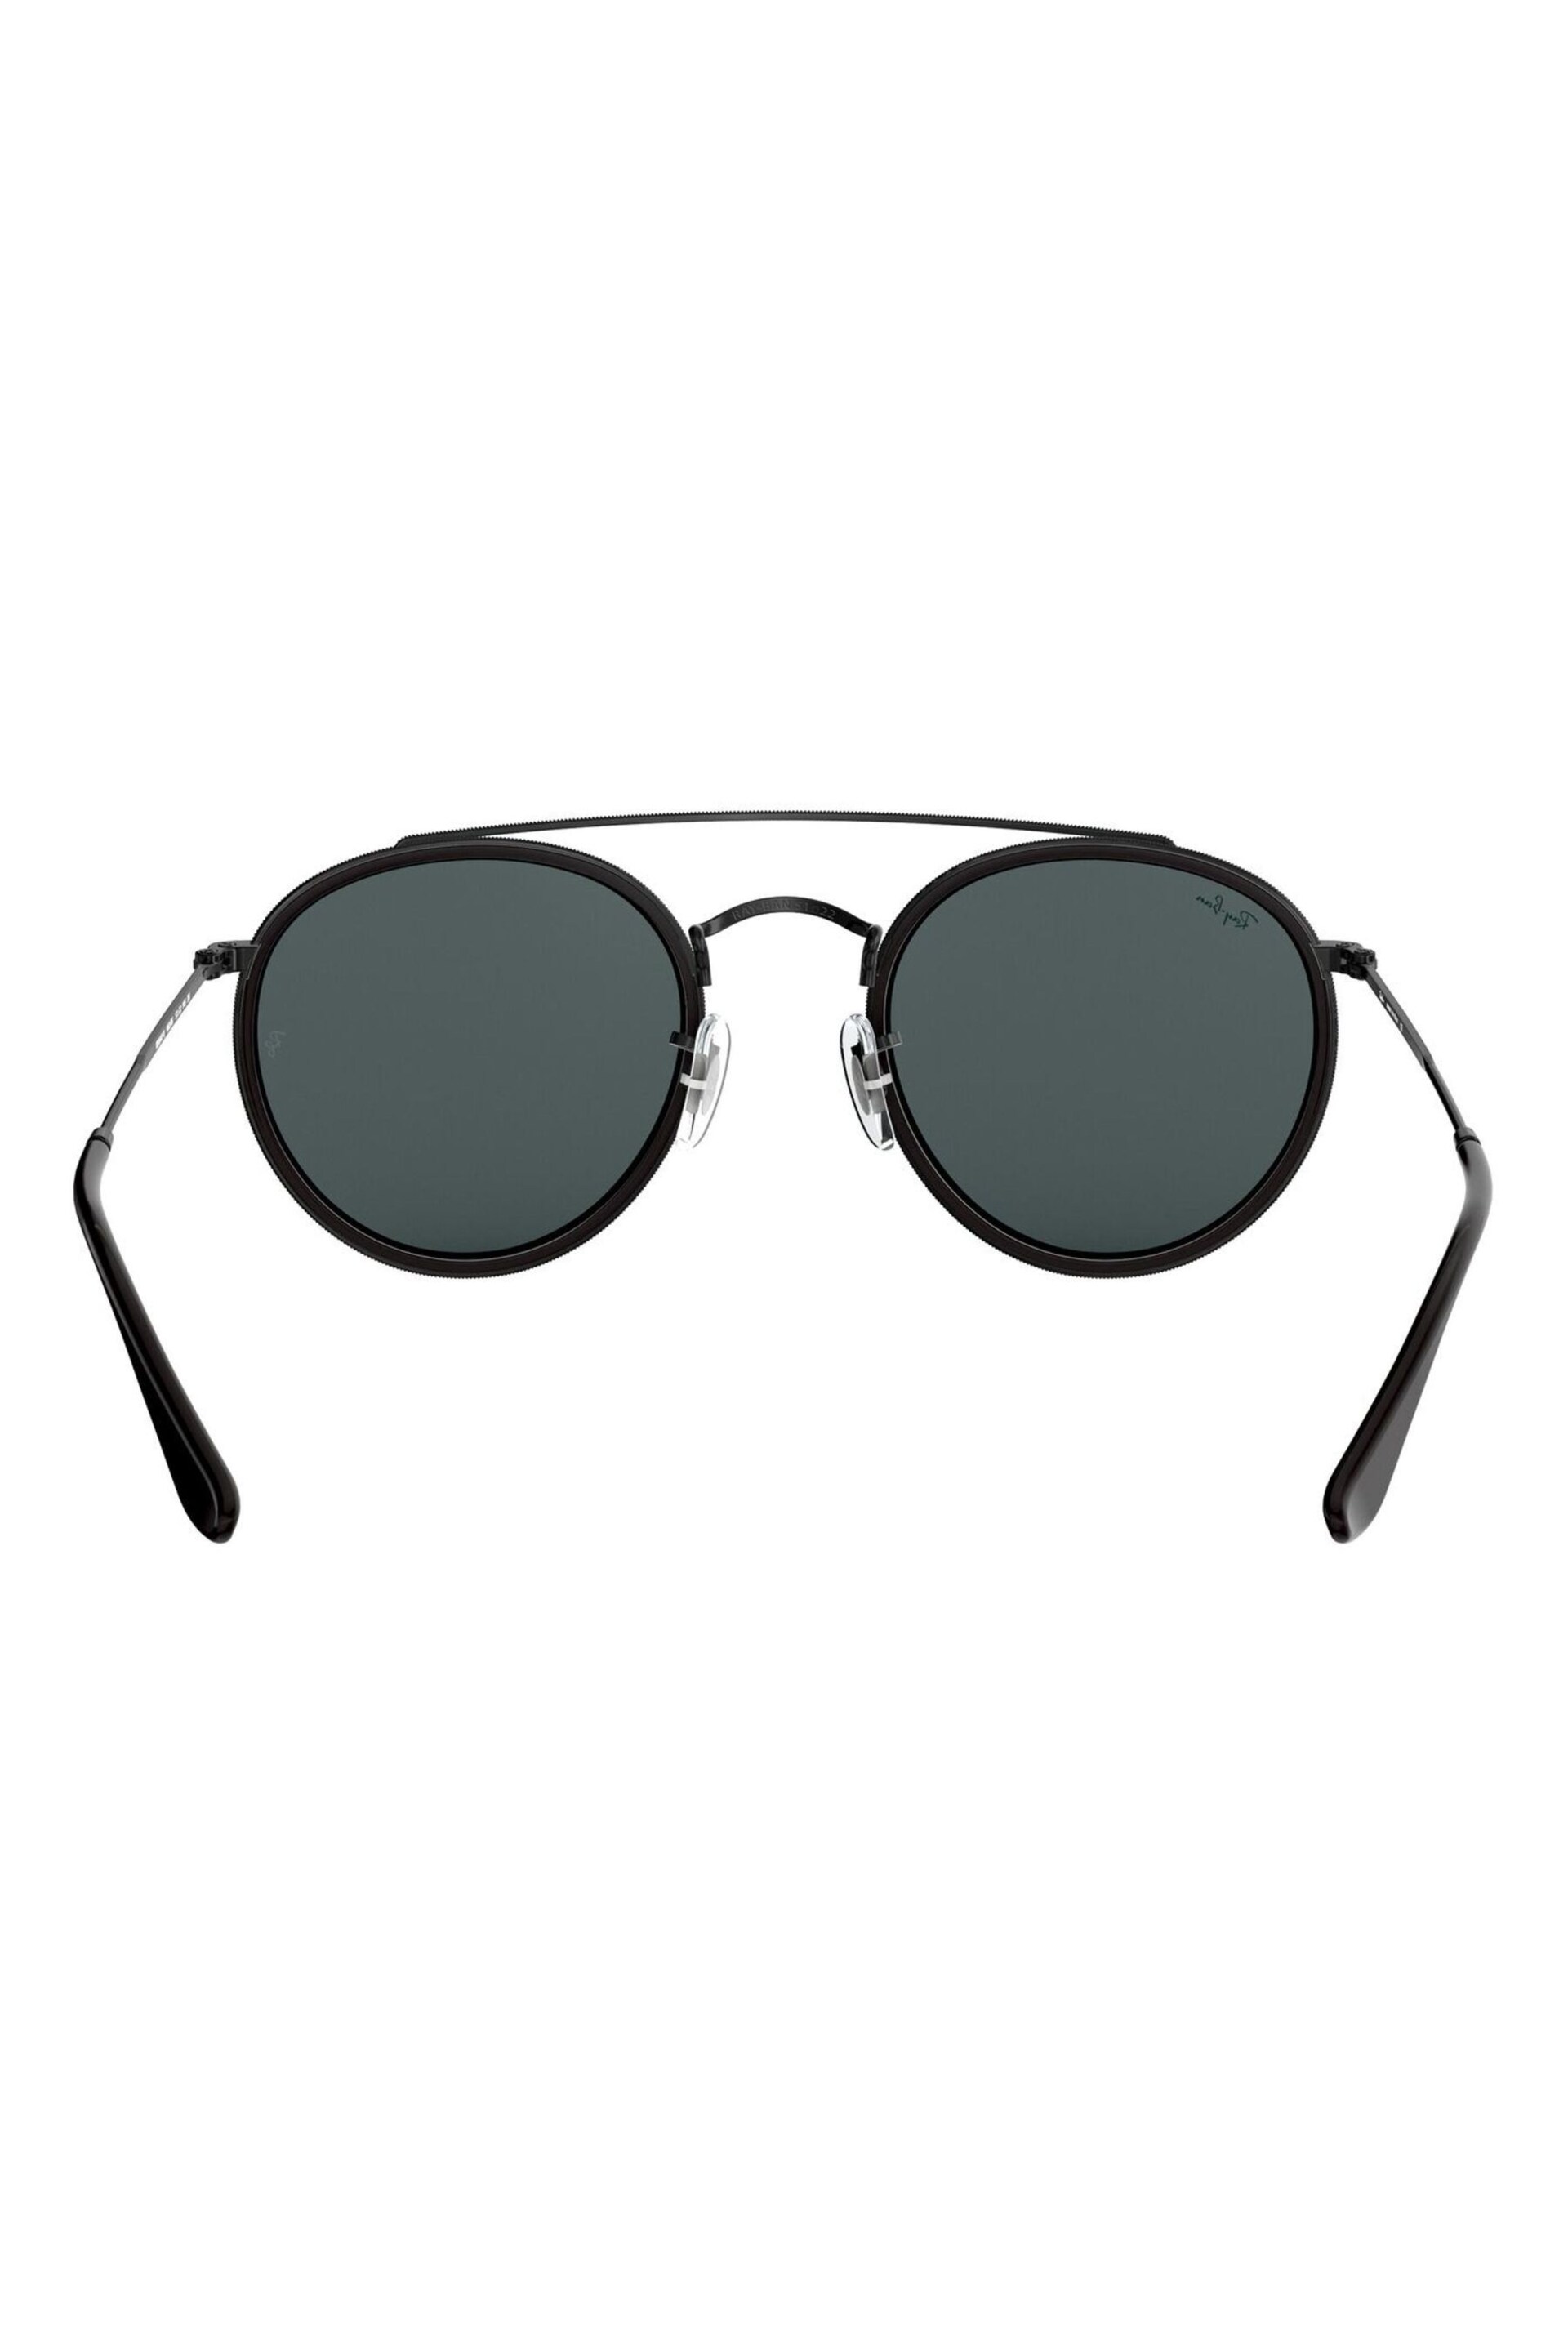 Ray-Ban Round Sunglasses - Image 4 of 14